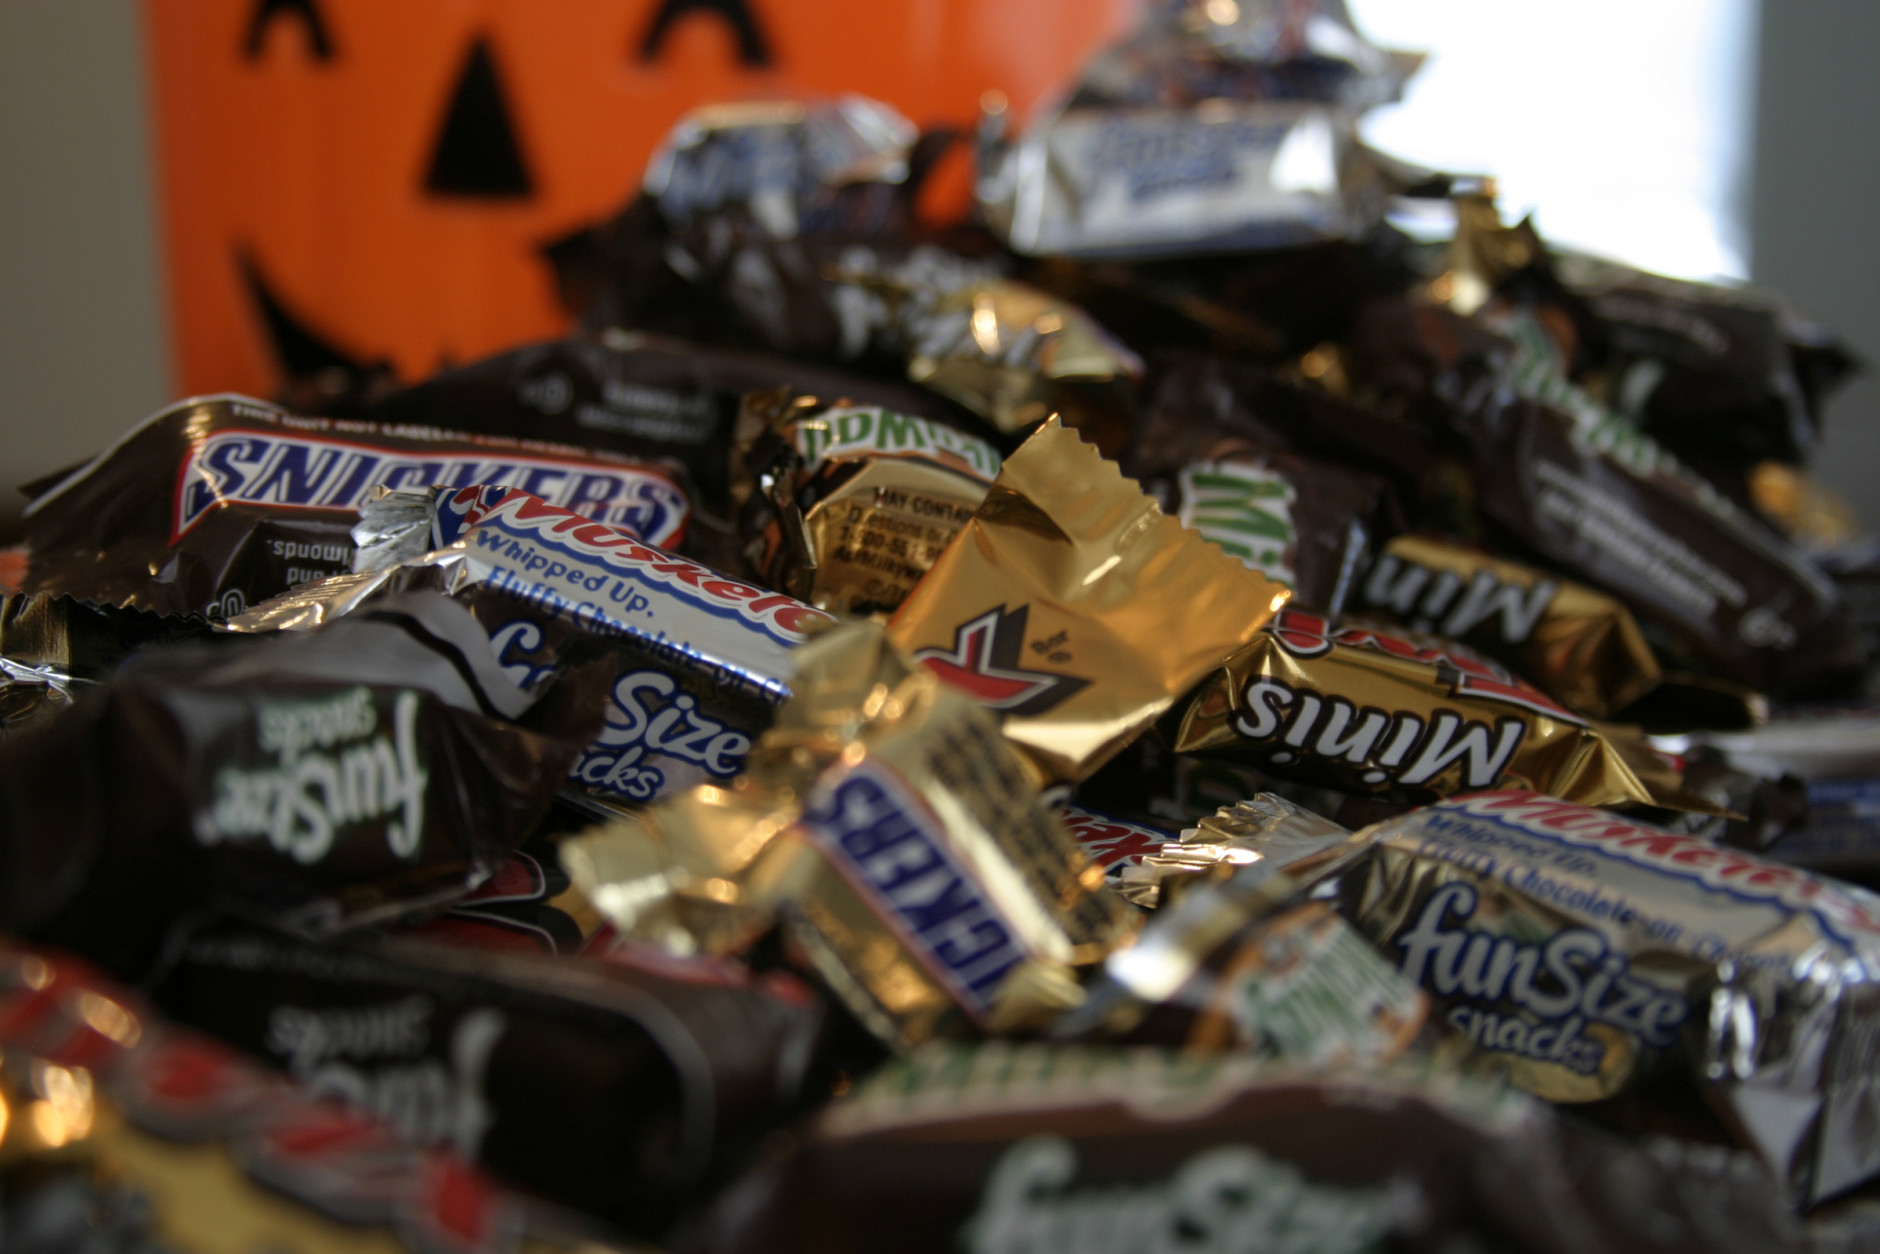 "Fun Size" and "Mini" candies are candy favorites. (AP Photo/Dan Goodman)